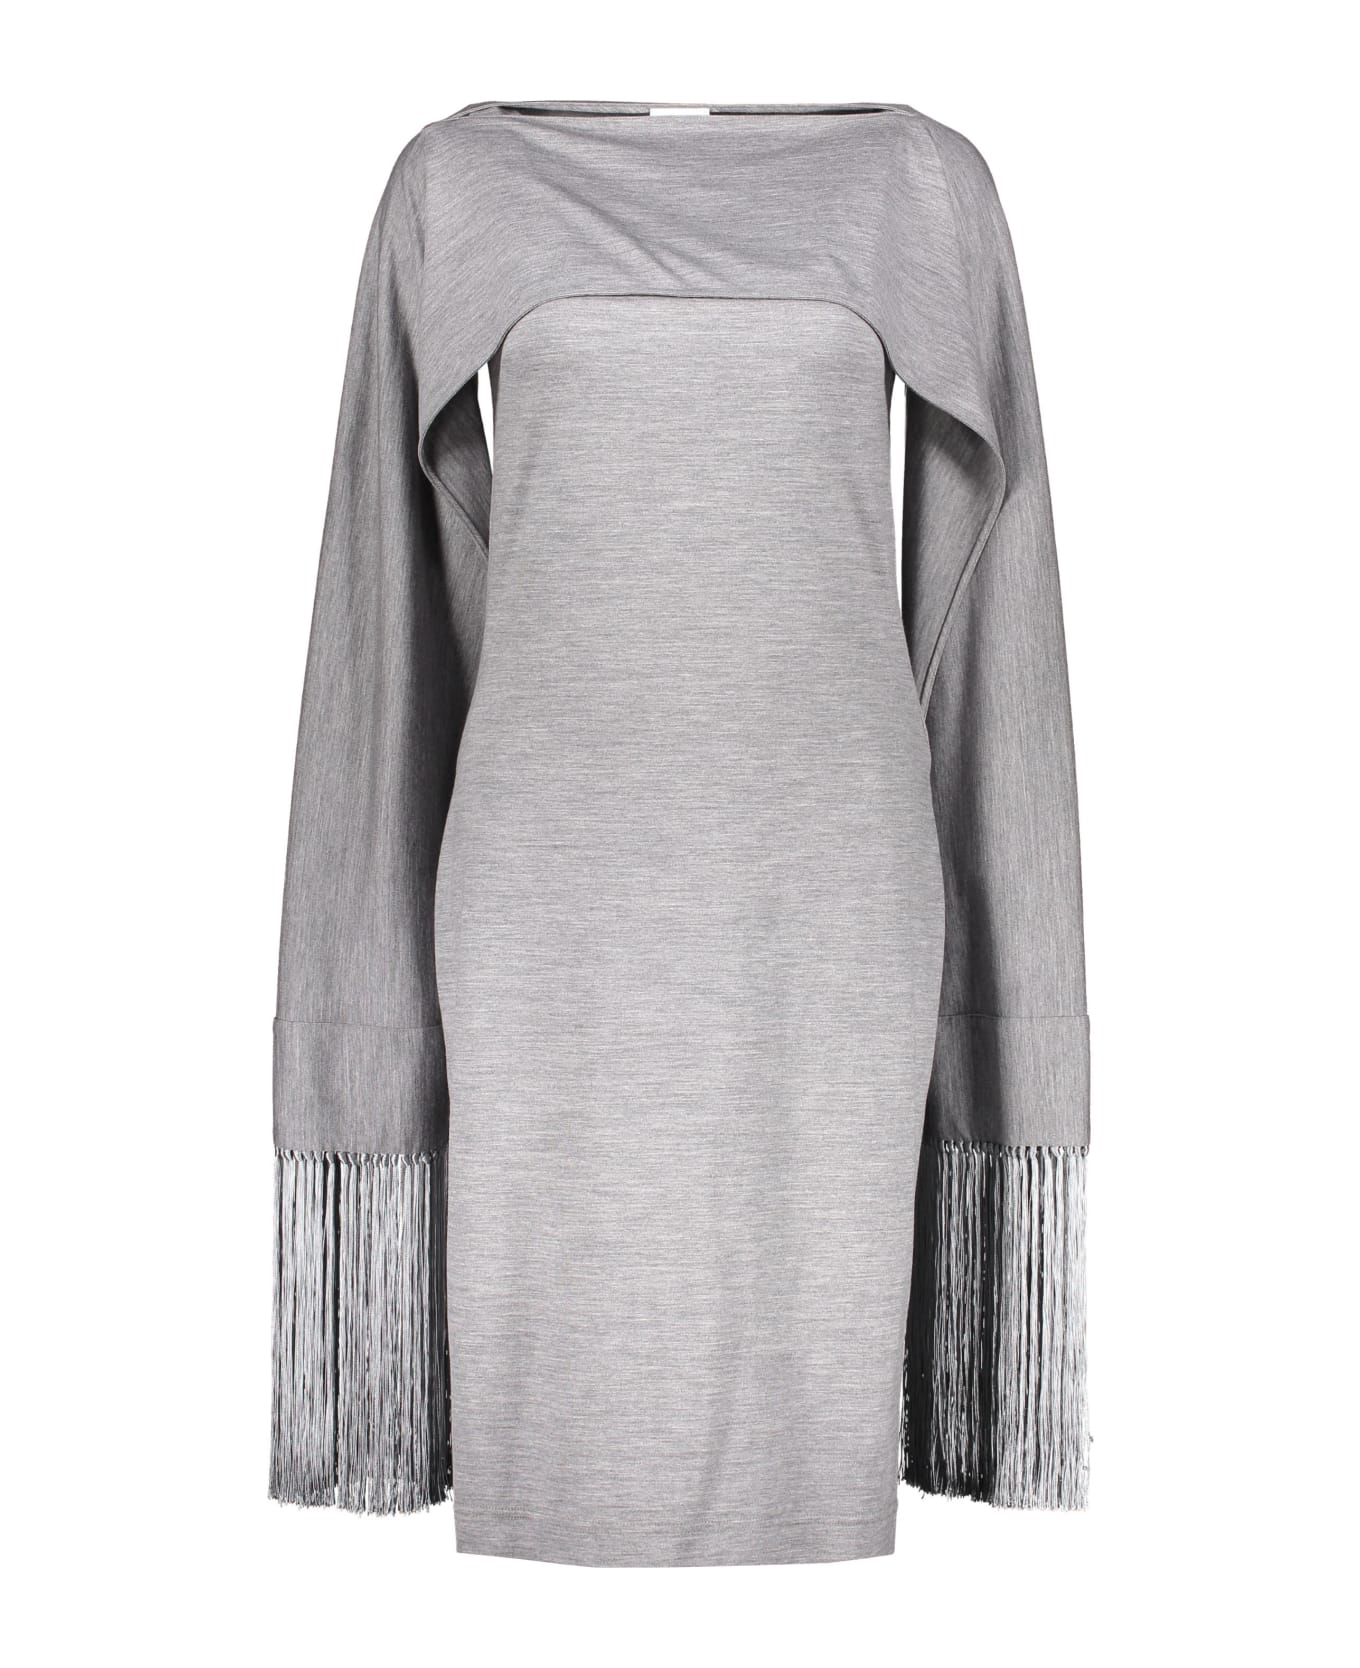 Burberry Wool Dress - grey